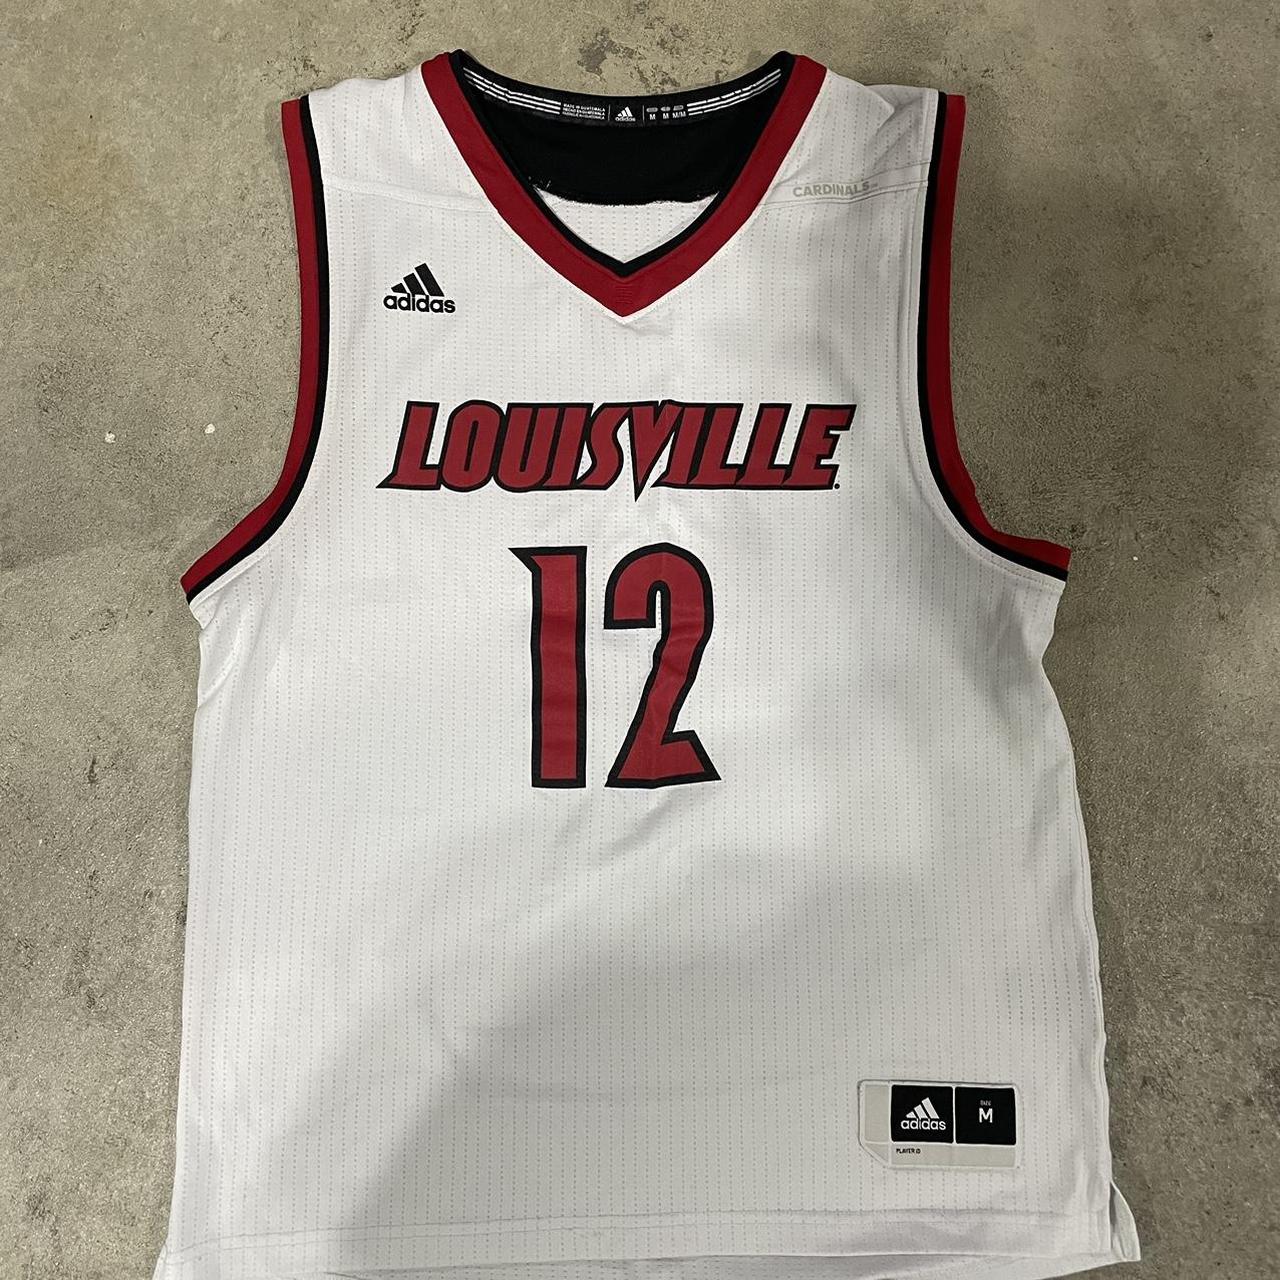 Louisville Cardinals white jersey